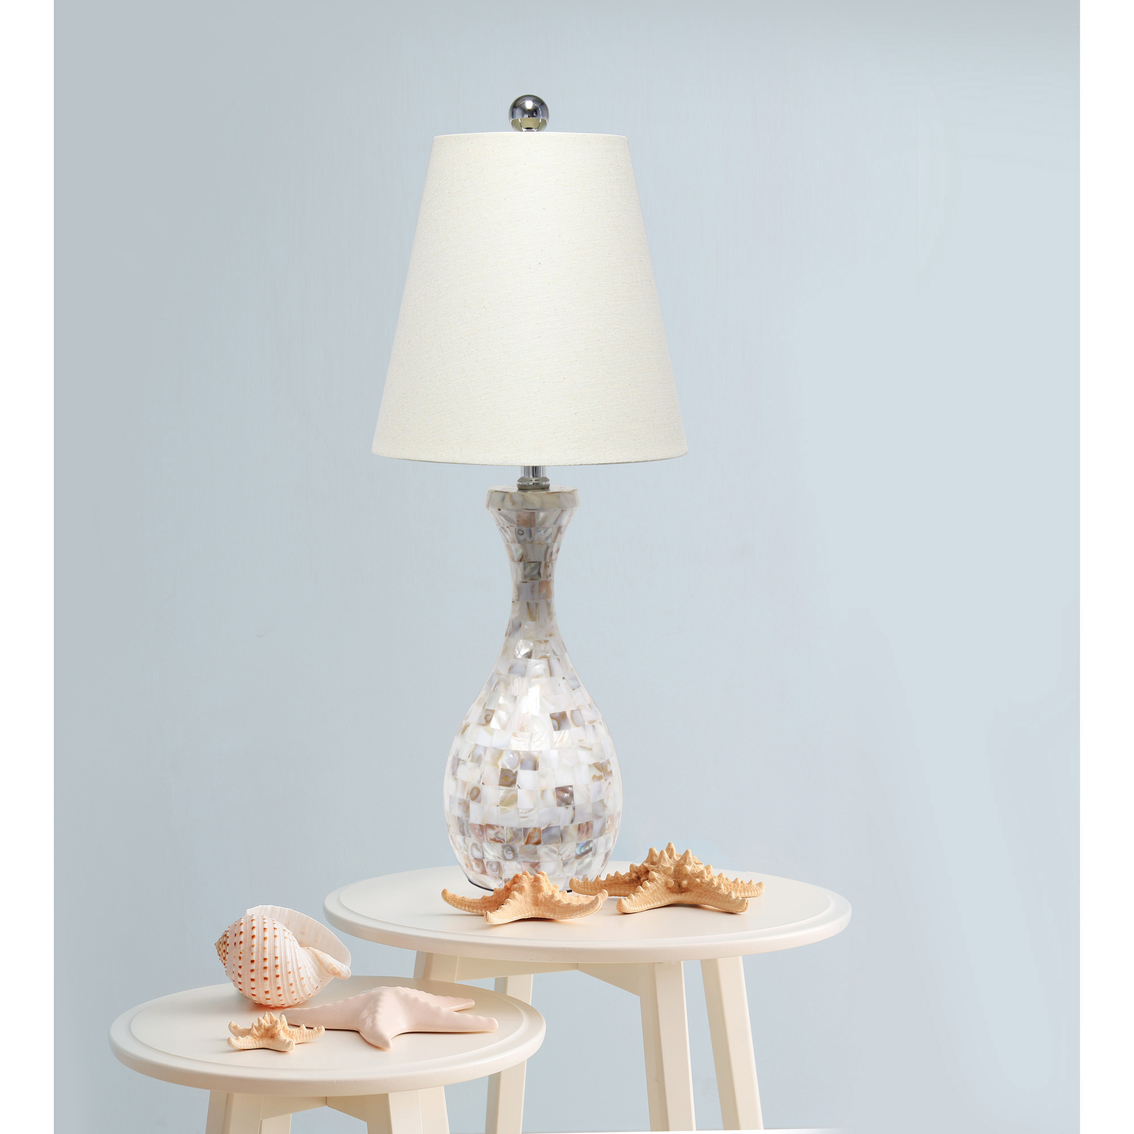 Lalia Home Malibu Curved Mosaic Seashell Table Lamp - Image 5 of 7